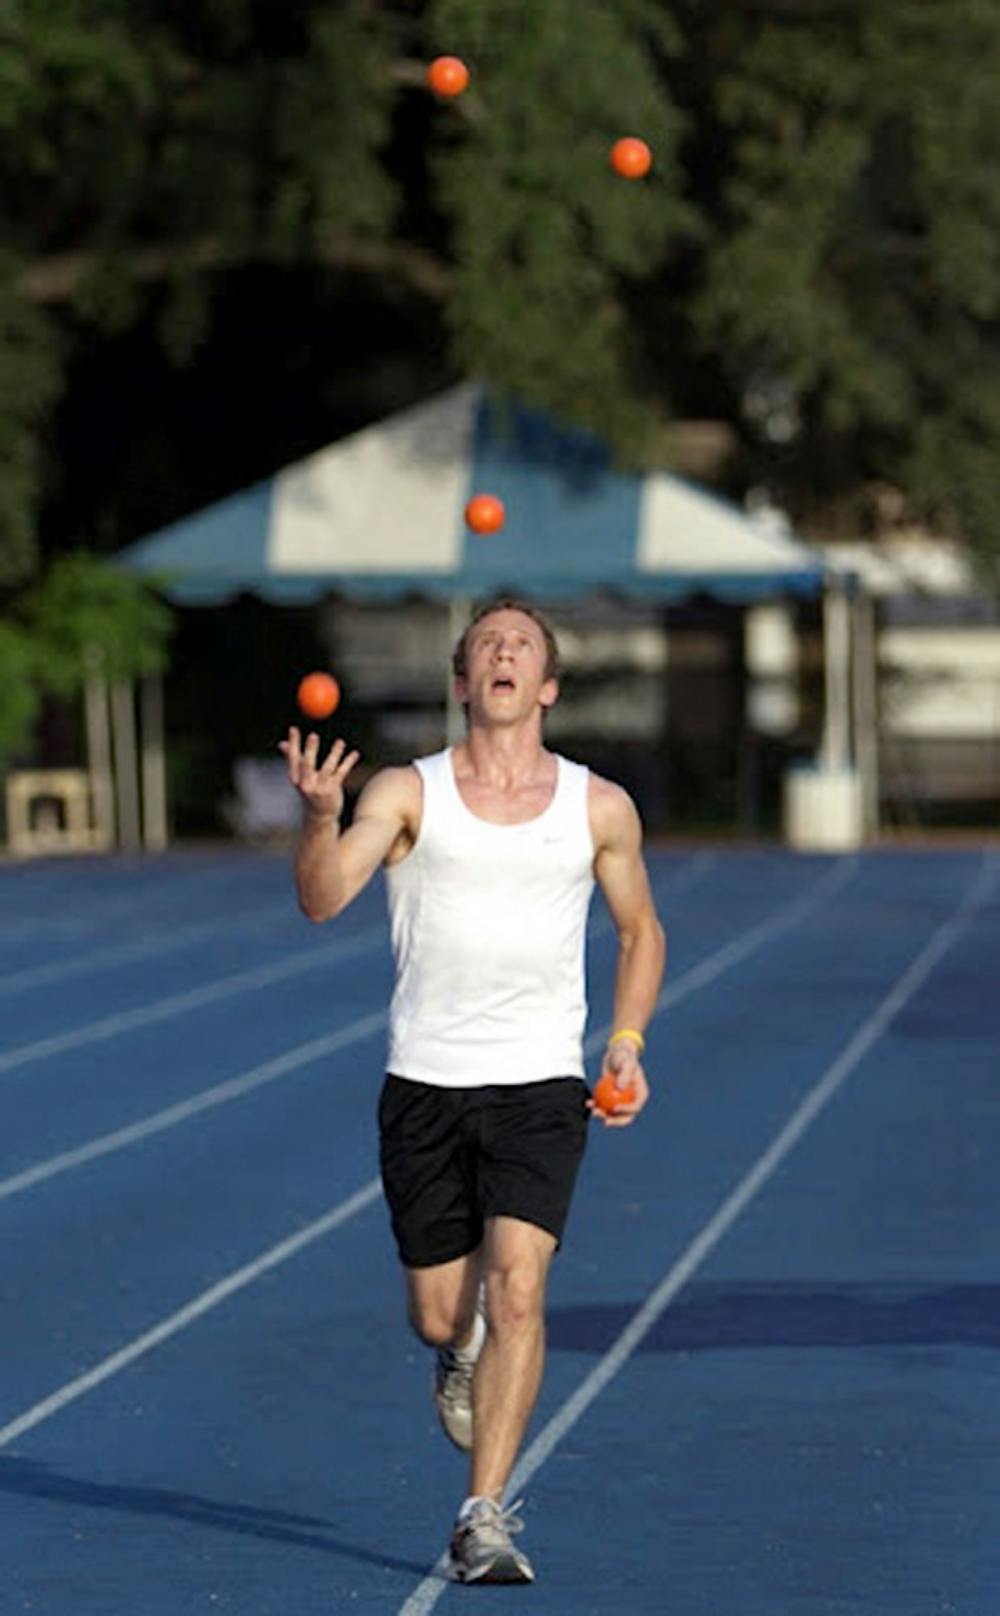 <p>UF junior Matthew Feldman broke the Guinness World Record for five-ball joggling at Rice University Friday.</p>